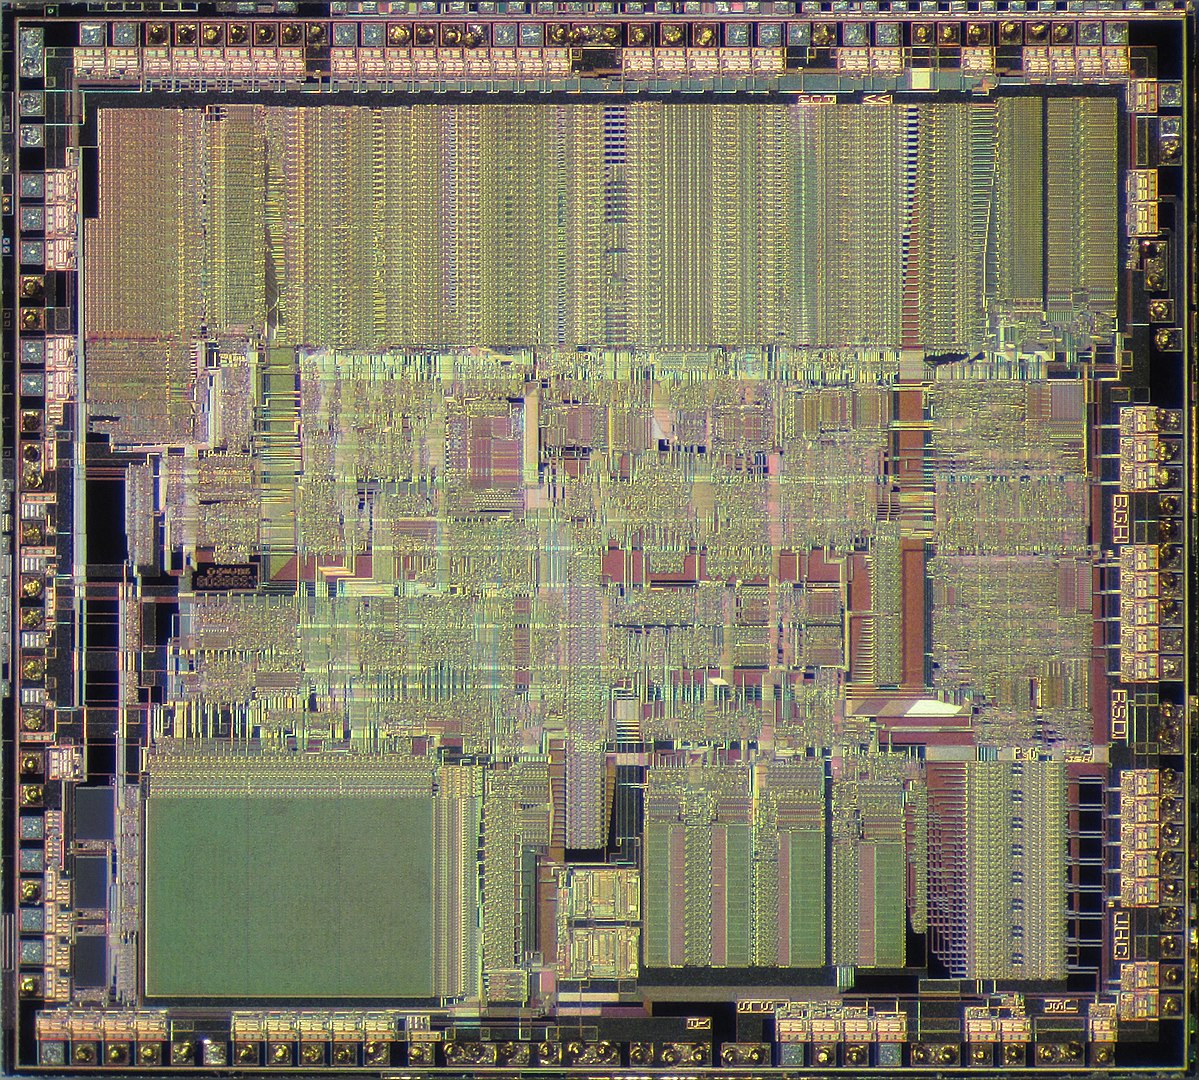 The Intel 386 die — By Pauli Rautakorpi - Own work, CC BY 3.0